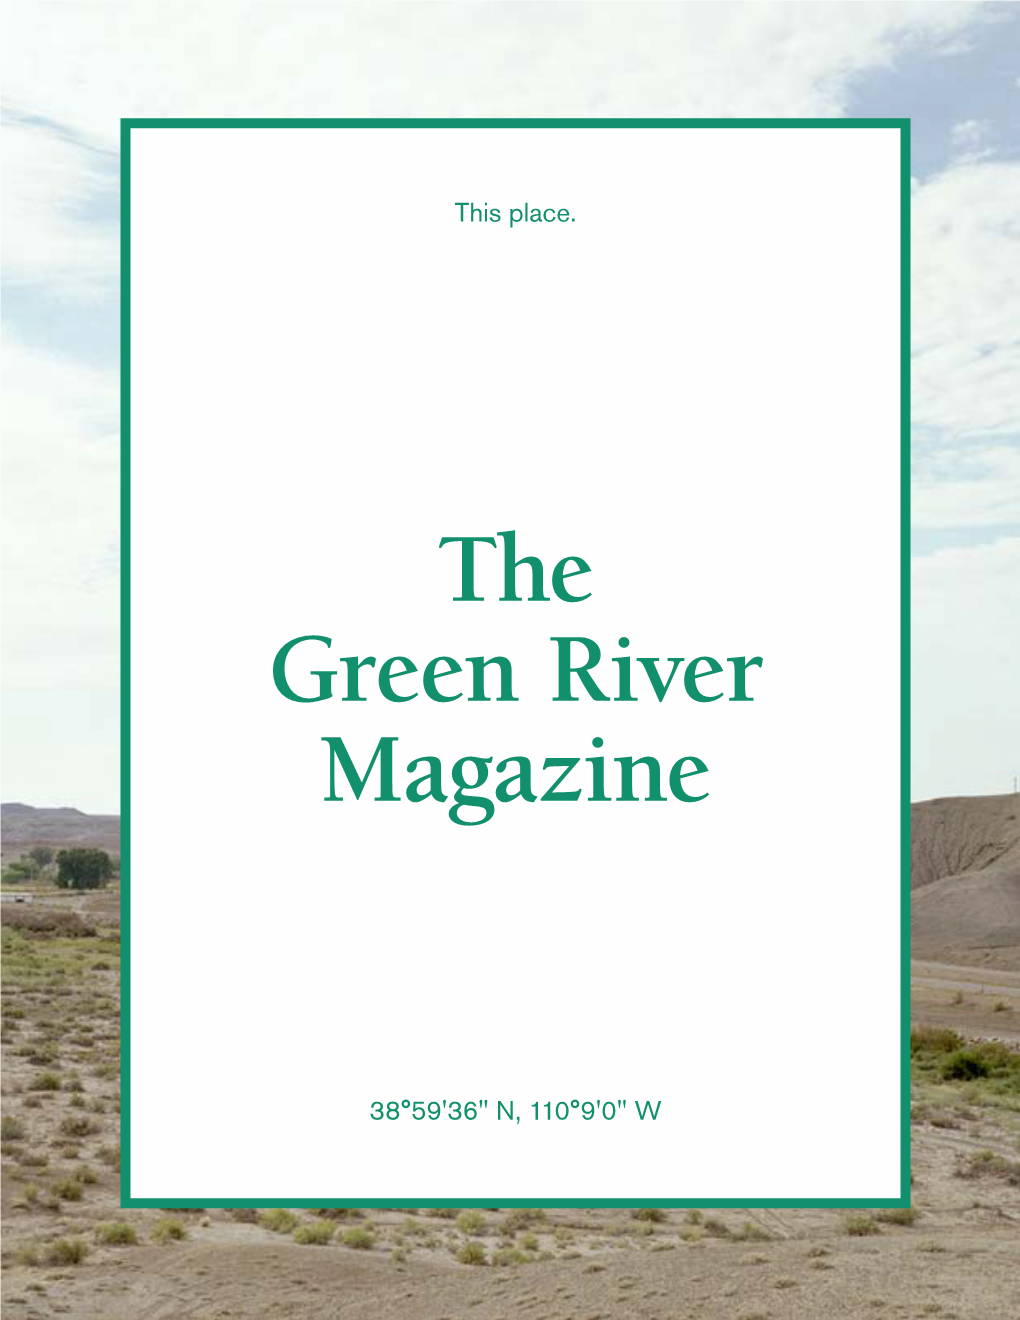 The Green River Magazine